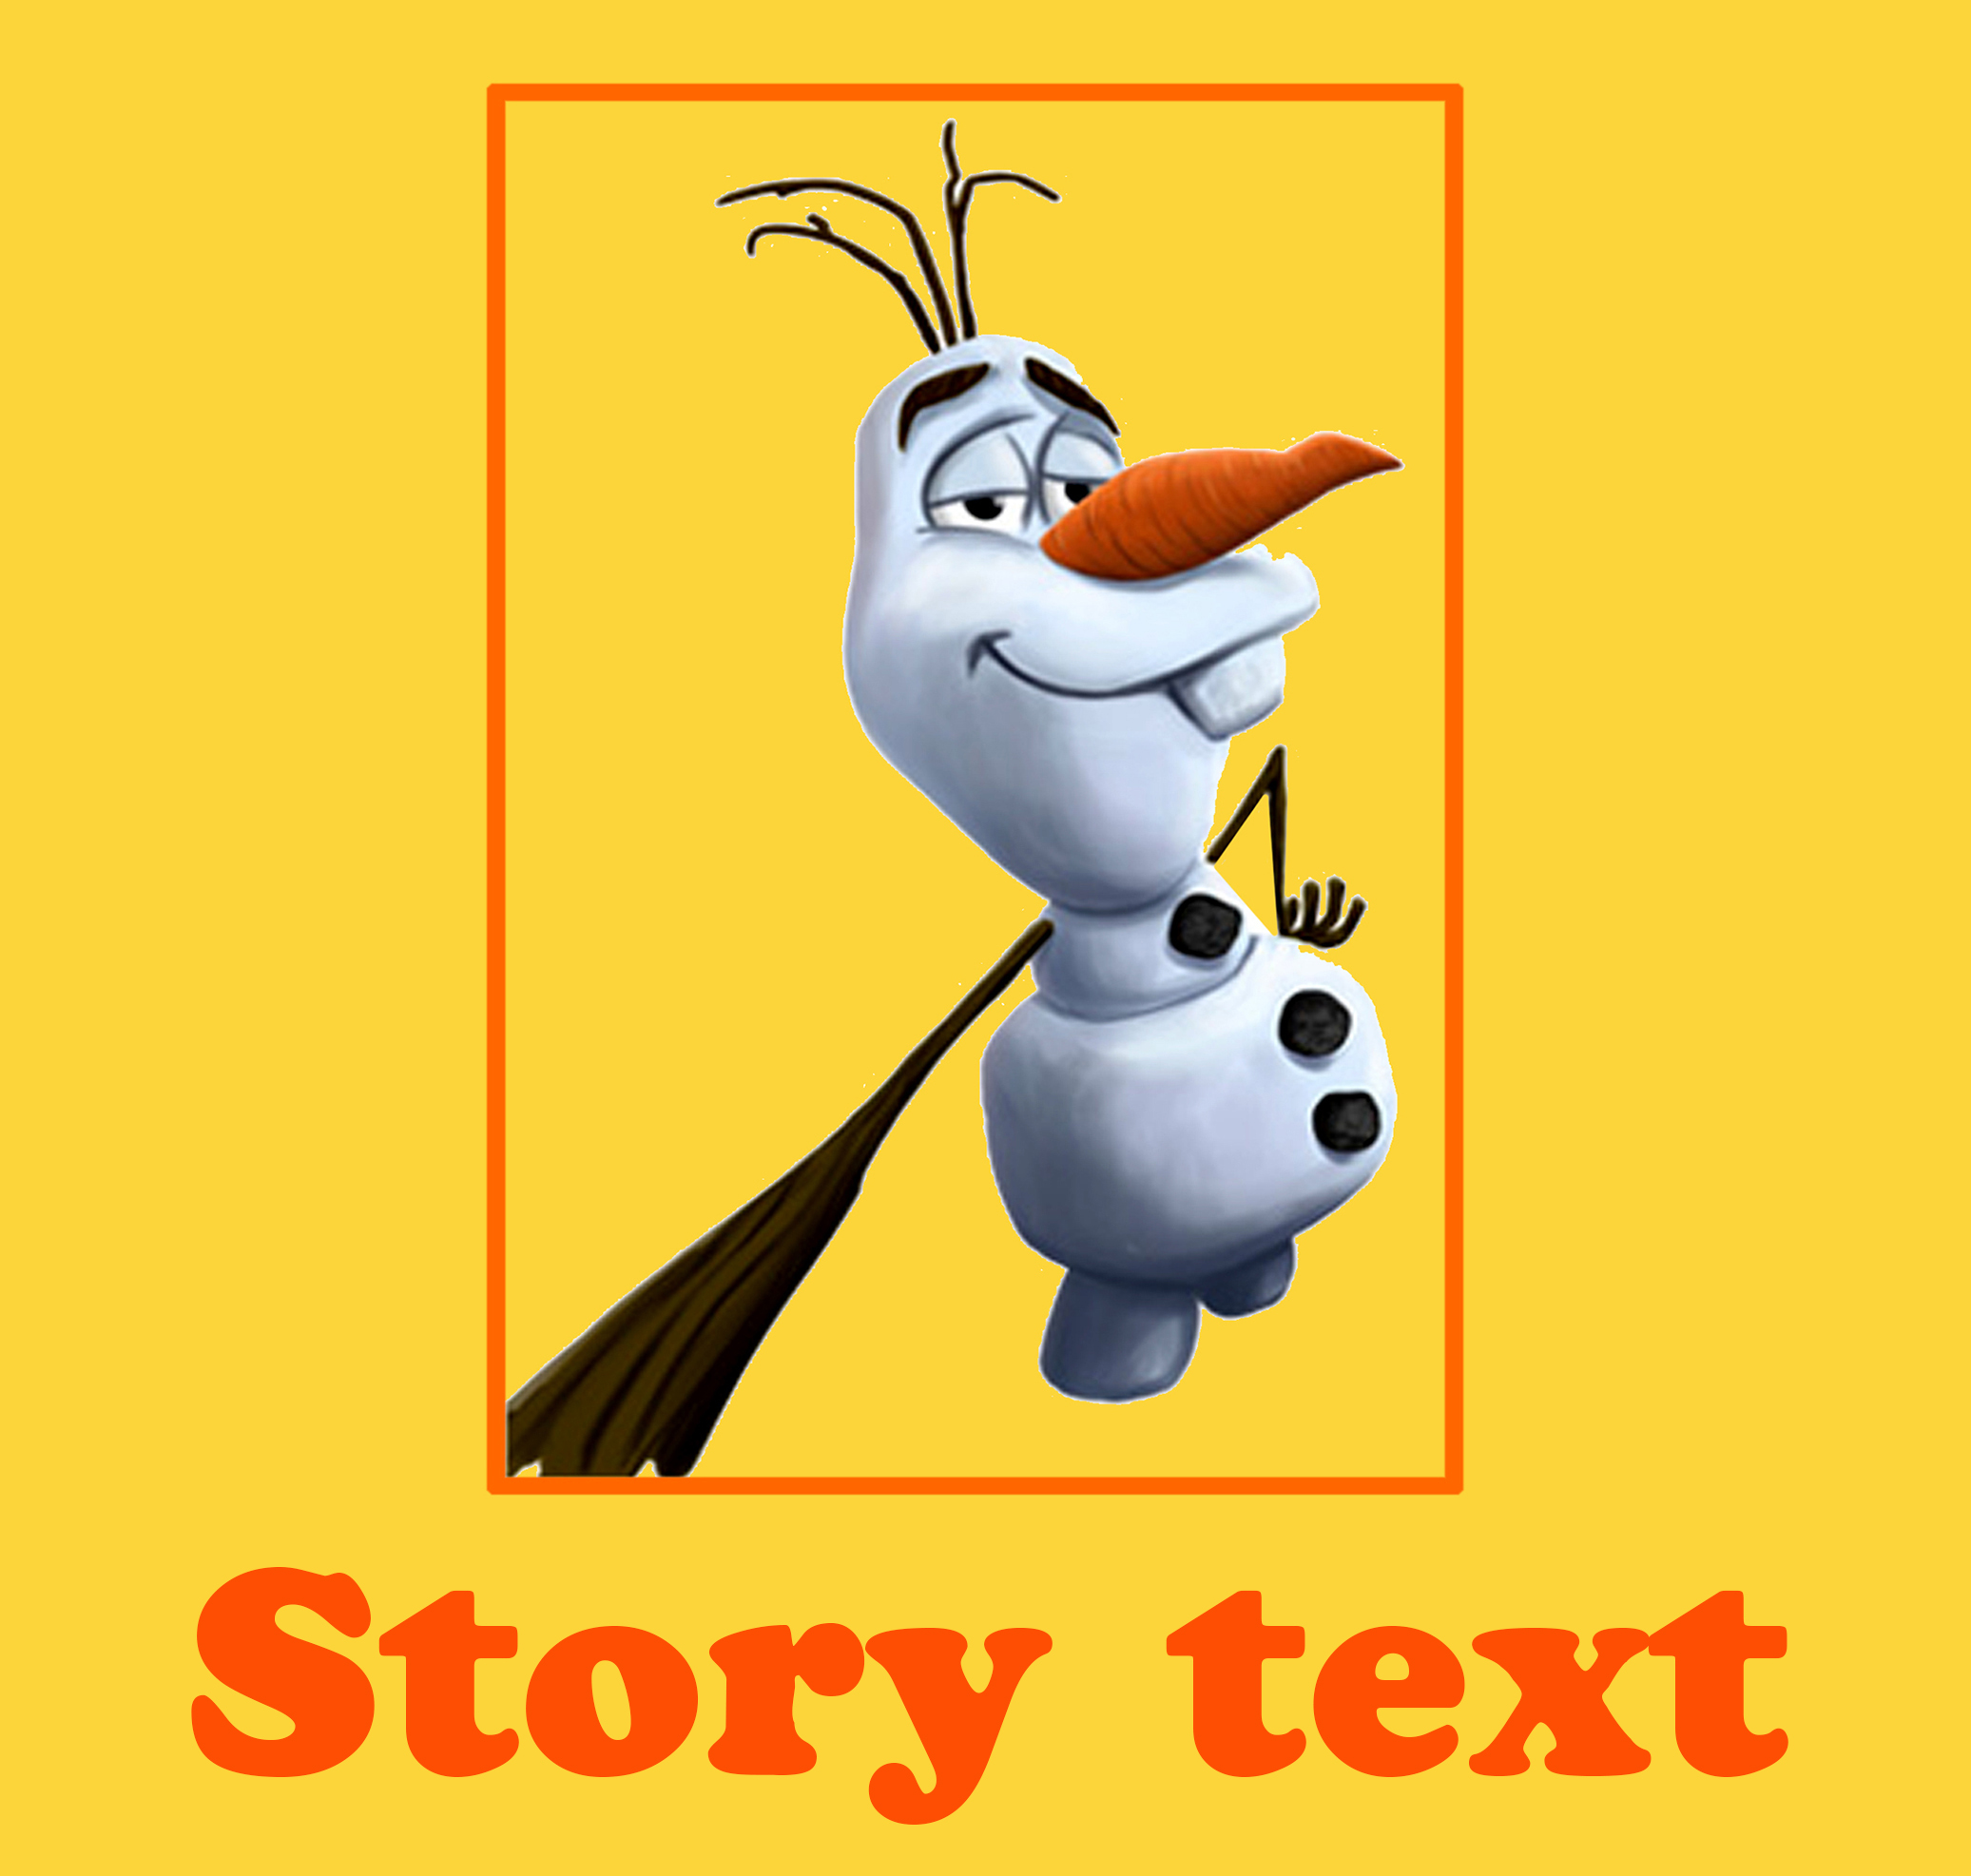 Stories text